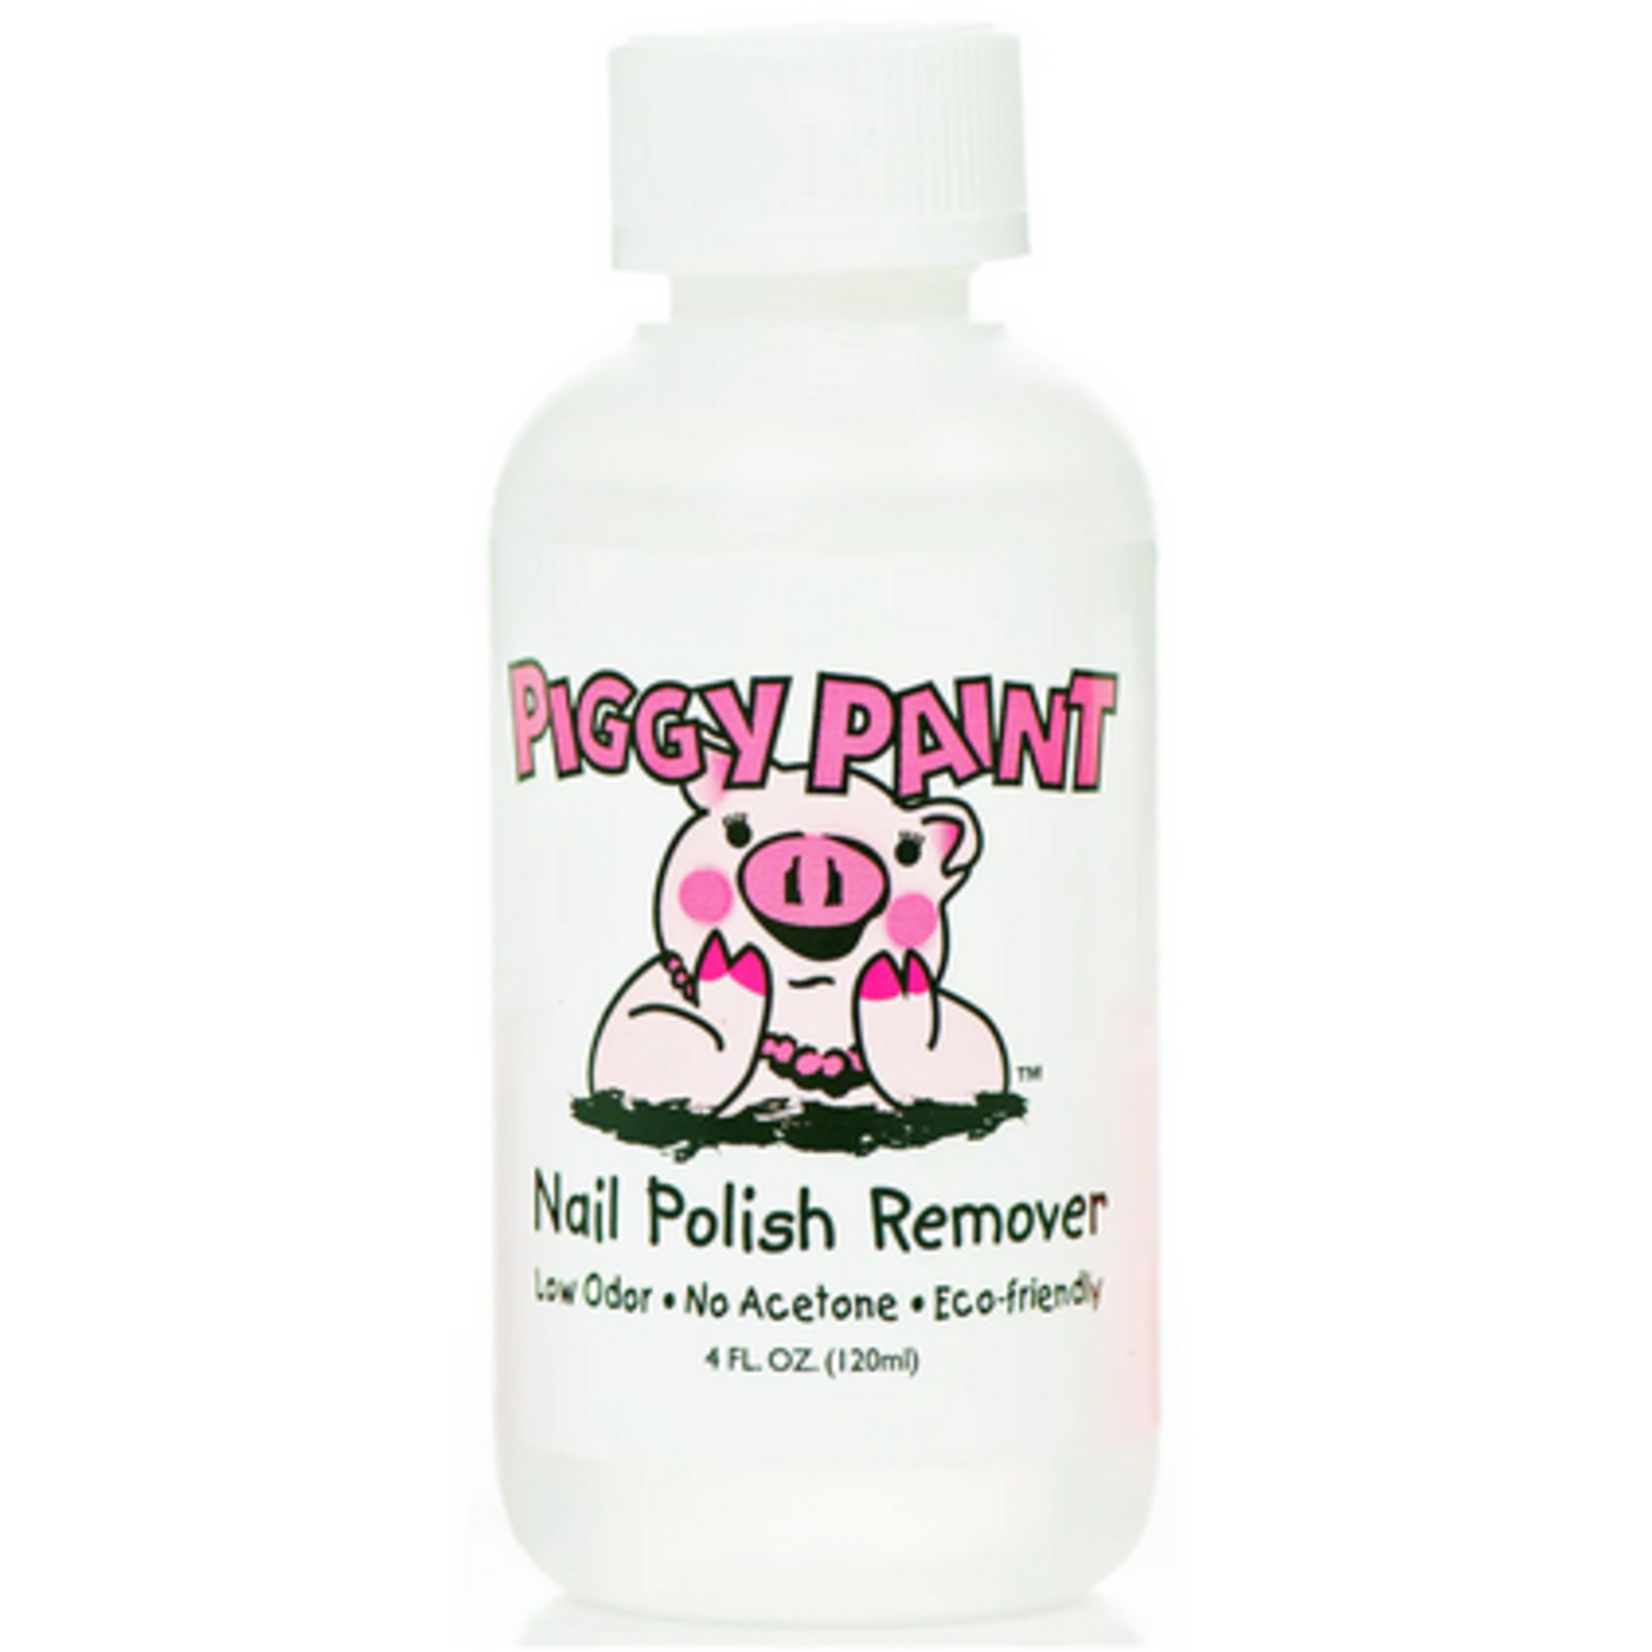 PIGGY PAINT Nail Polish Remover